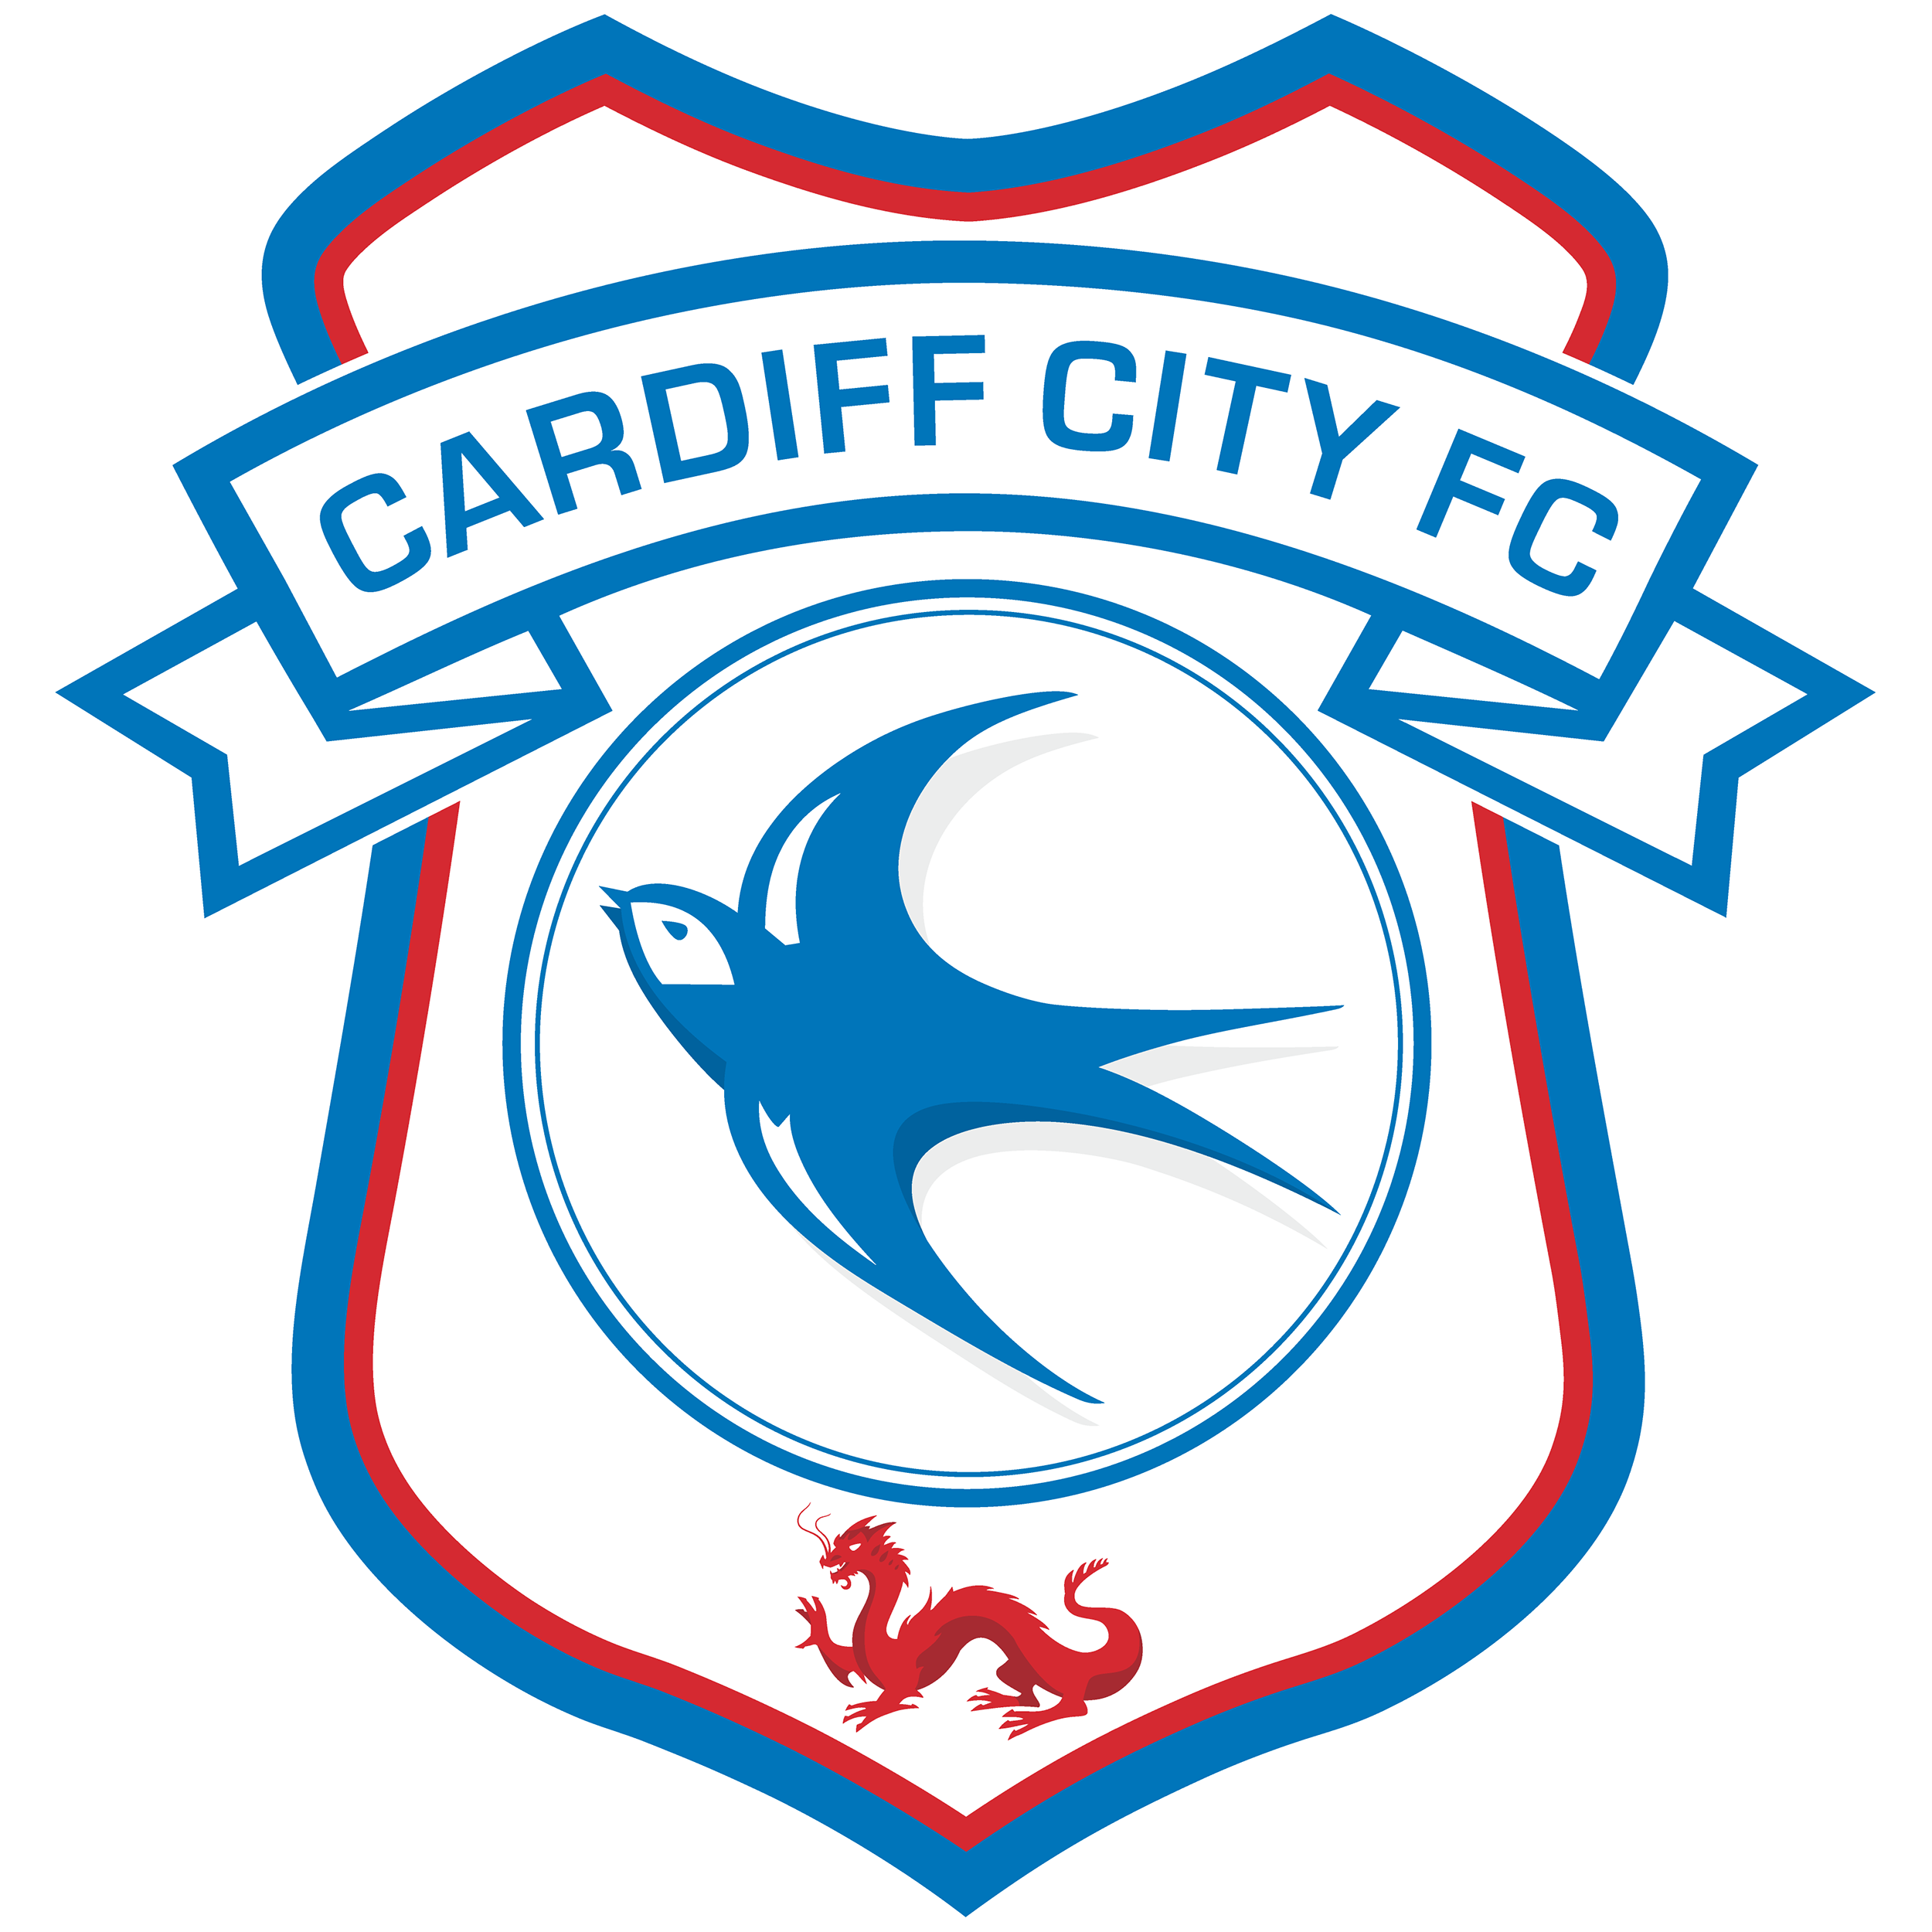 Cardiff city f c logo Gambar Transparan